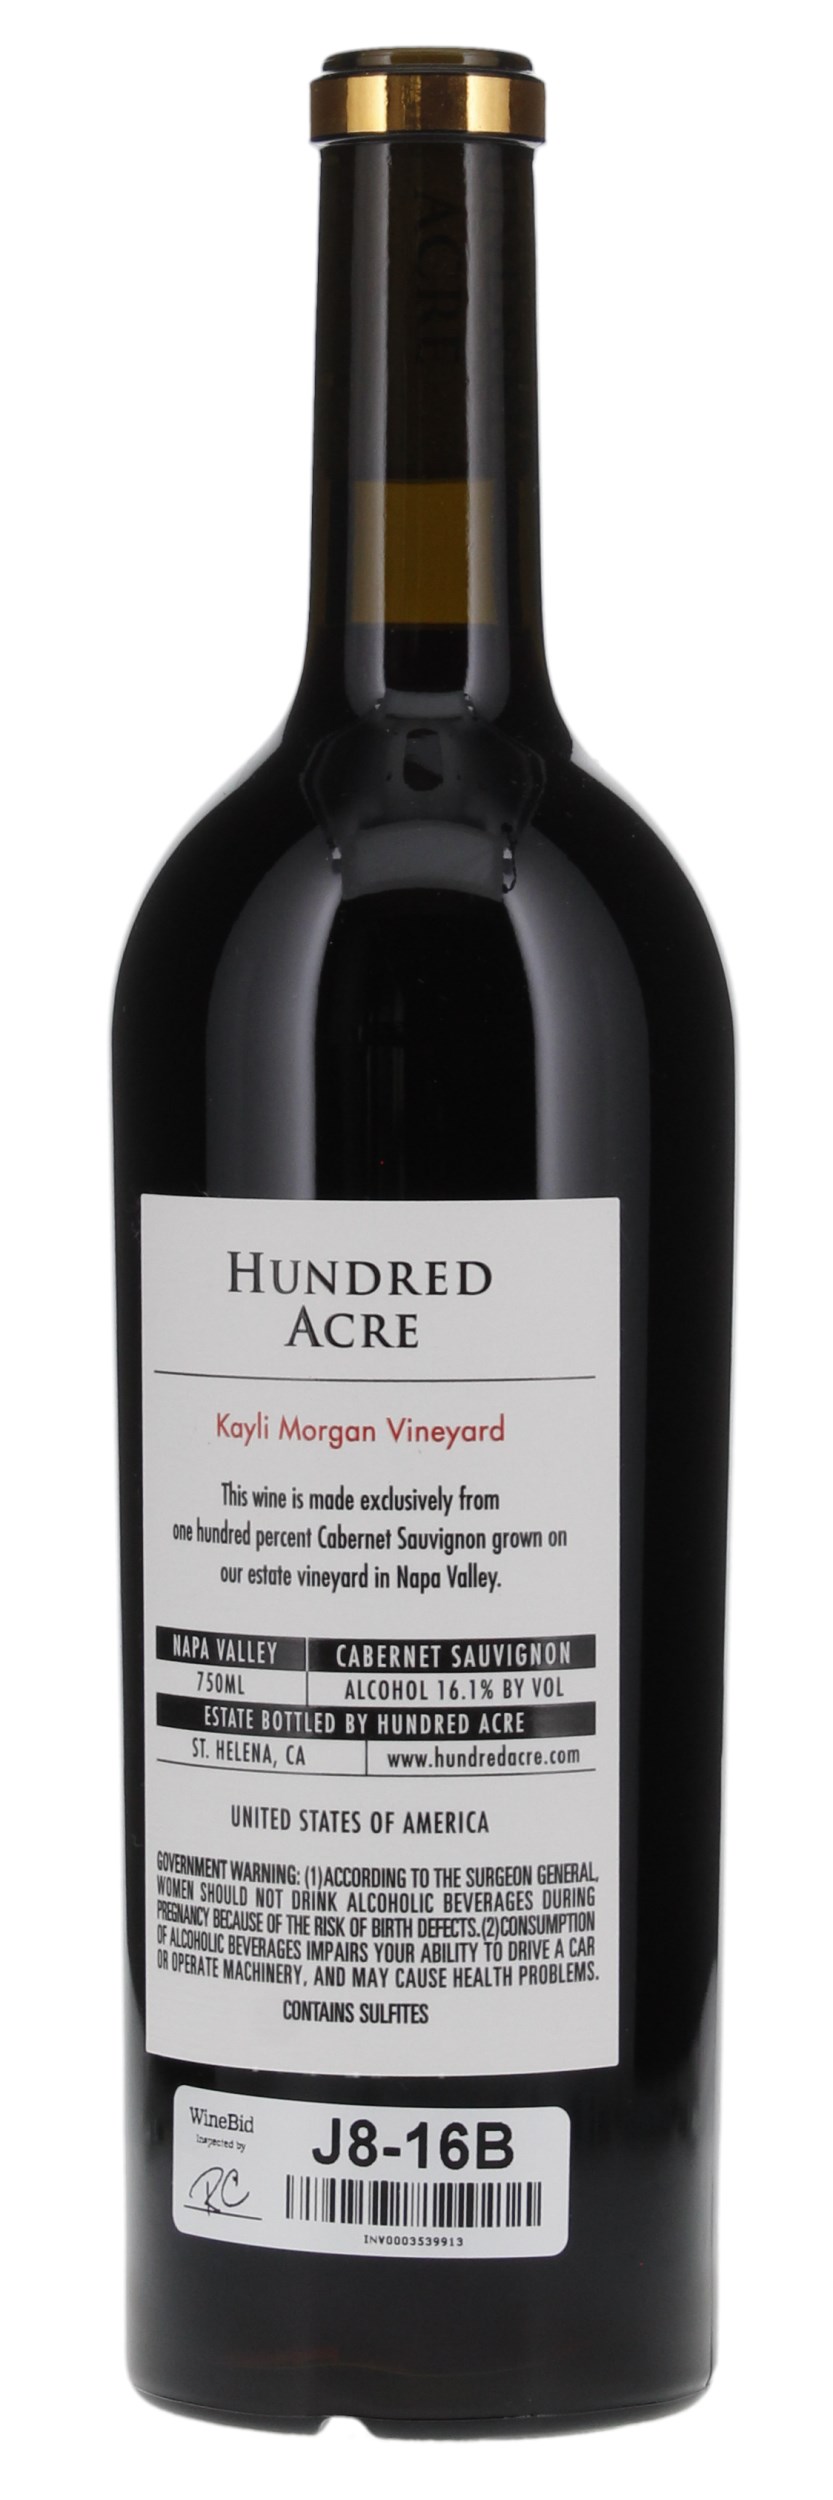 2017 Hundred Acre Kayli Morgan Vineyard Cabernet Sauvignon, 750ml